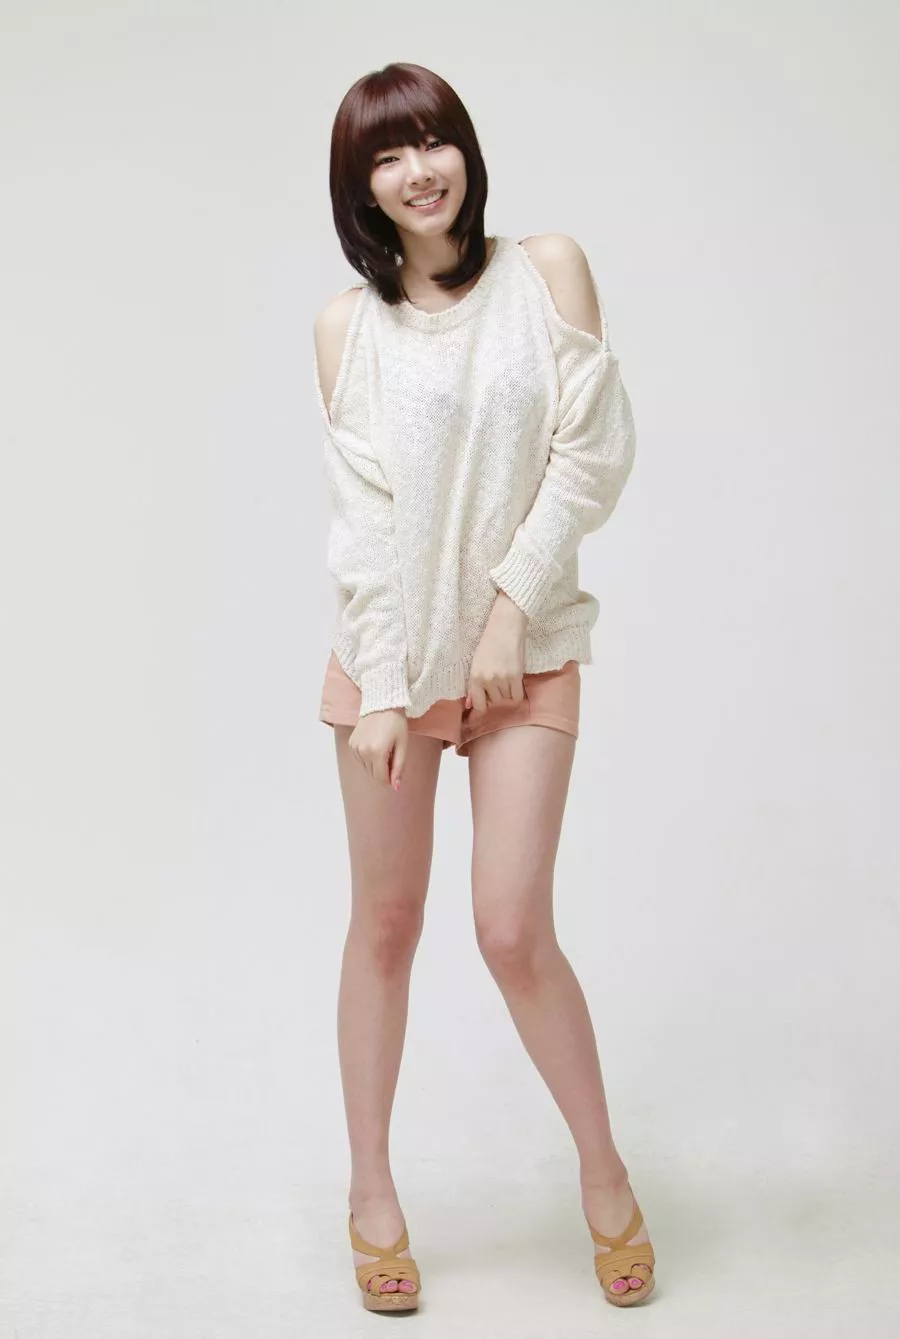 Xgyw.Org_韩国美女艺人裴涩琪高挑身材性感美腿写真11P